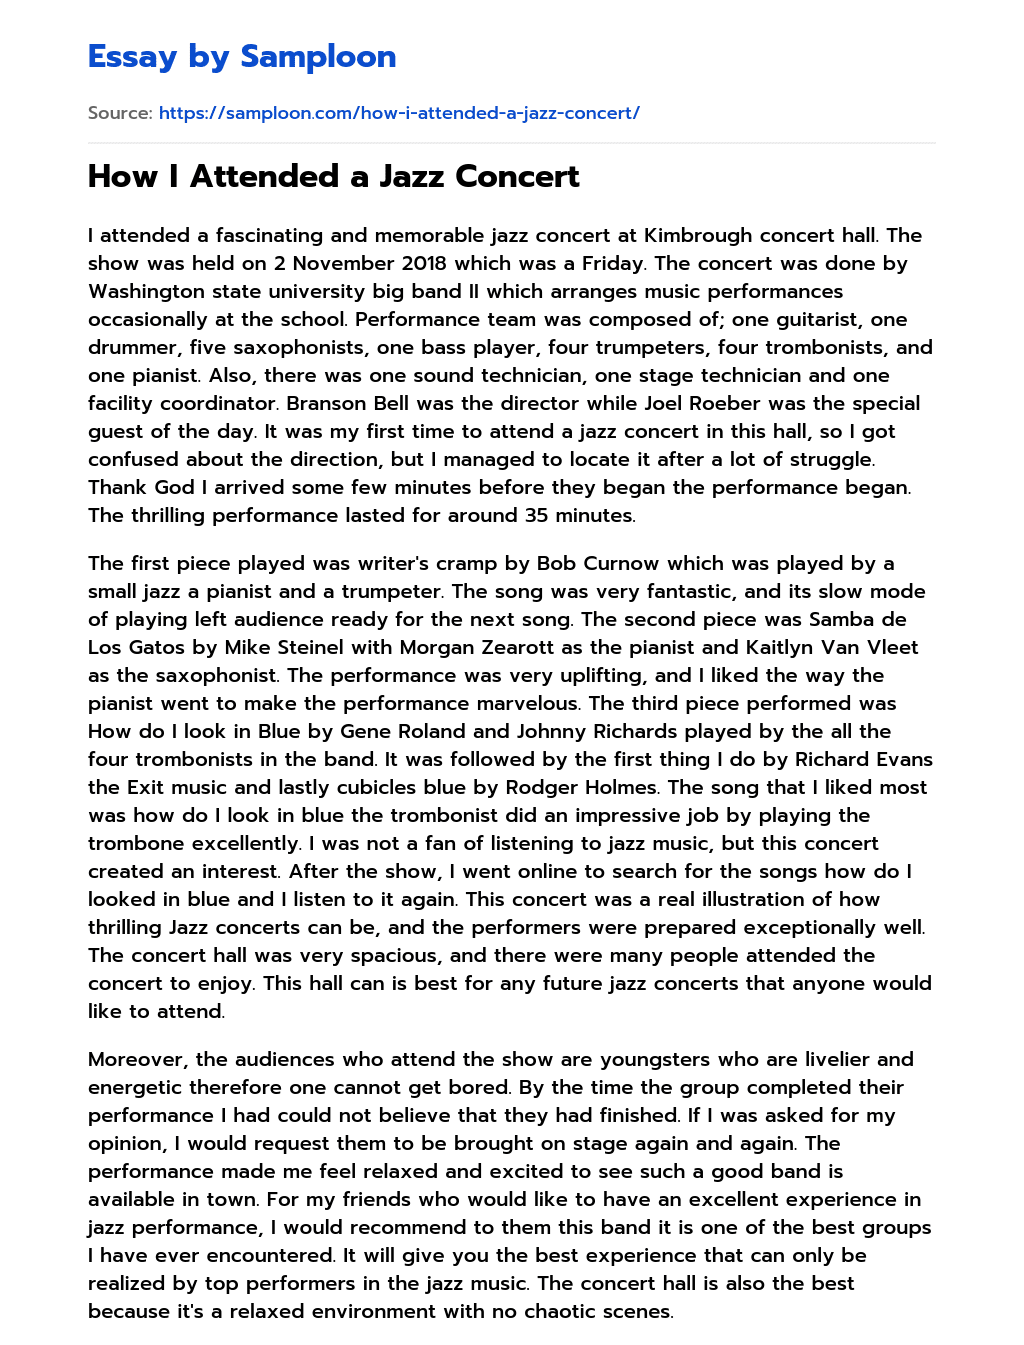 descriptive essay on my first concert